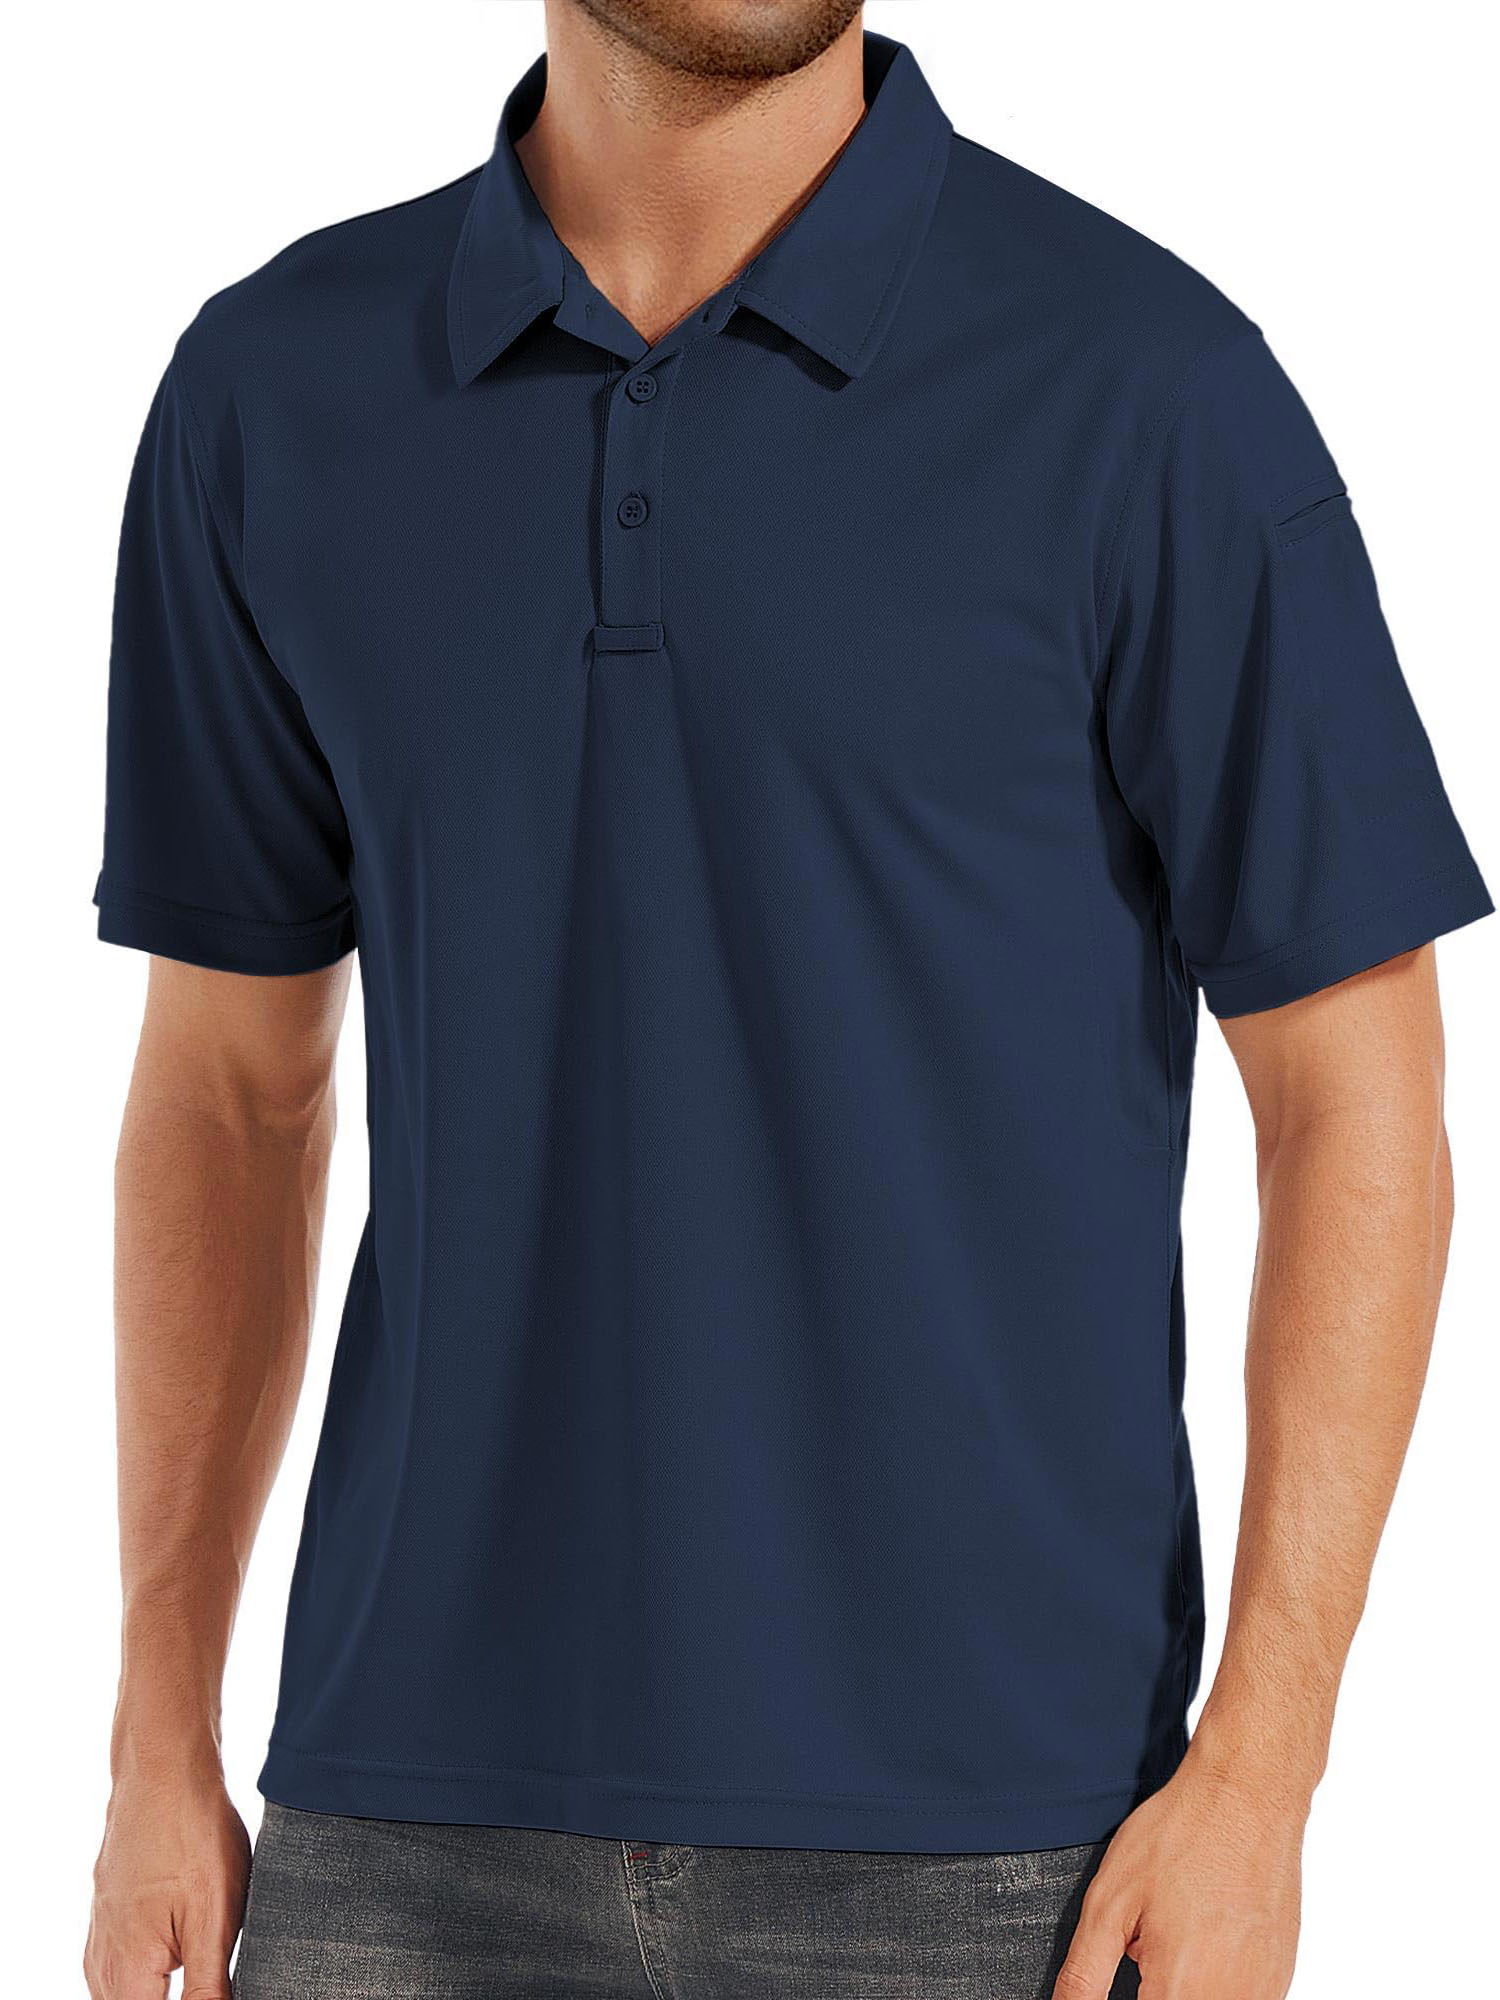 Men's Basics Sports Lapel Short Sleeve Polo Shirt